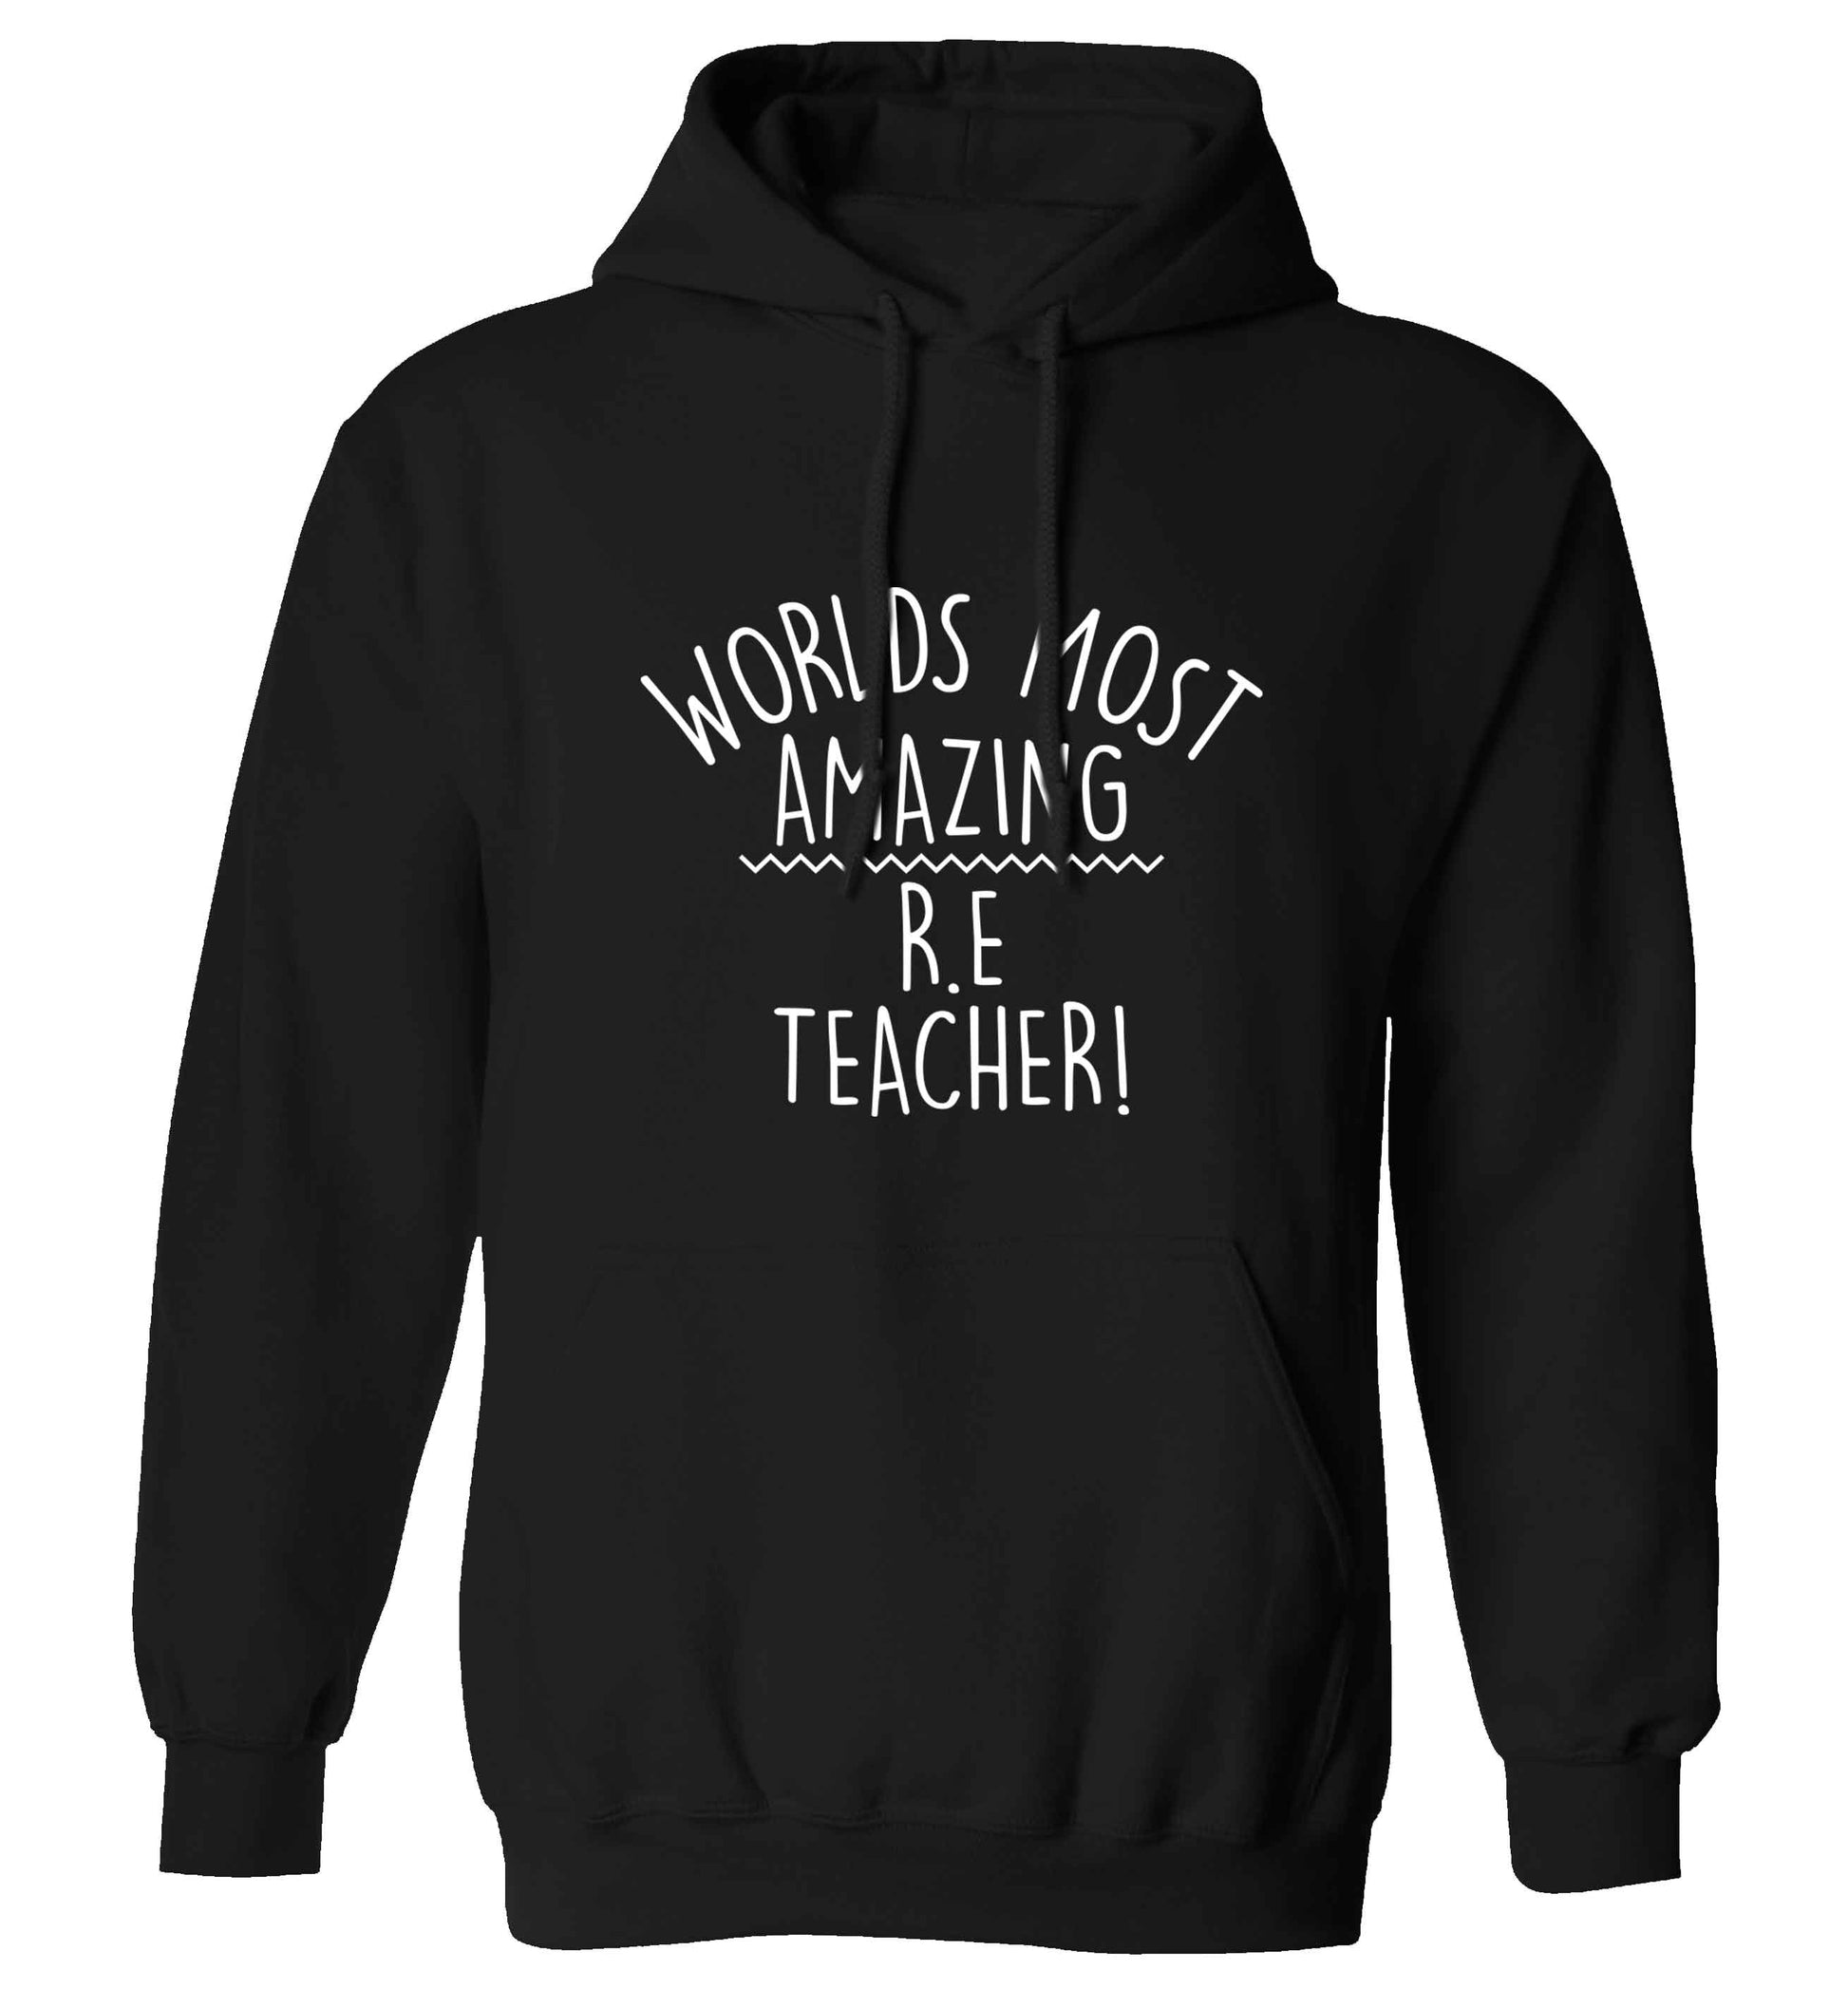 Worlds most amazing R.E teacher adults unisex black hoodie 2XL